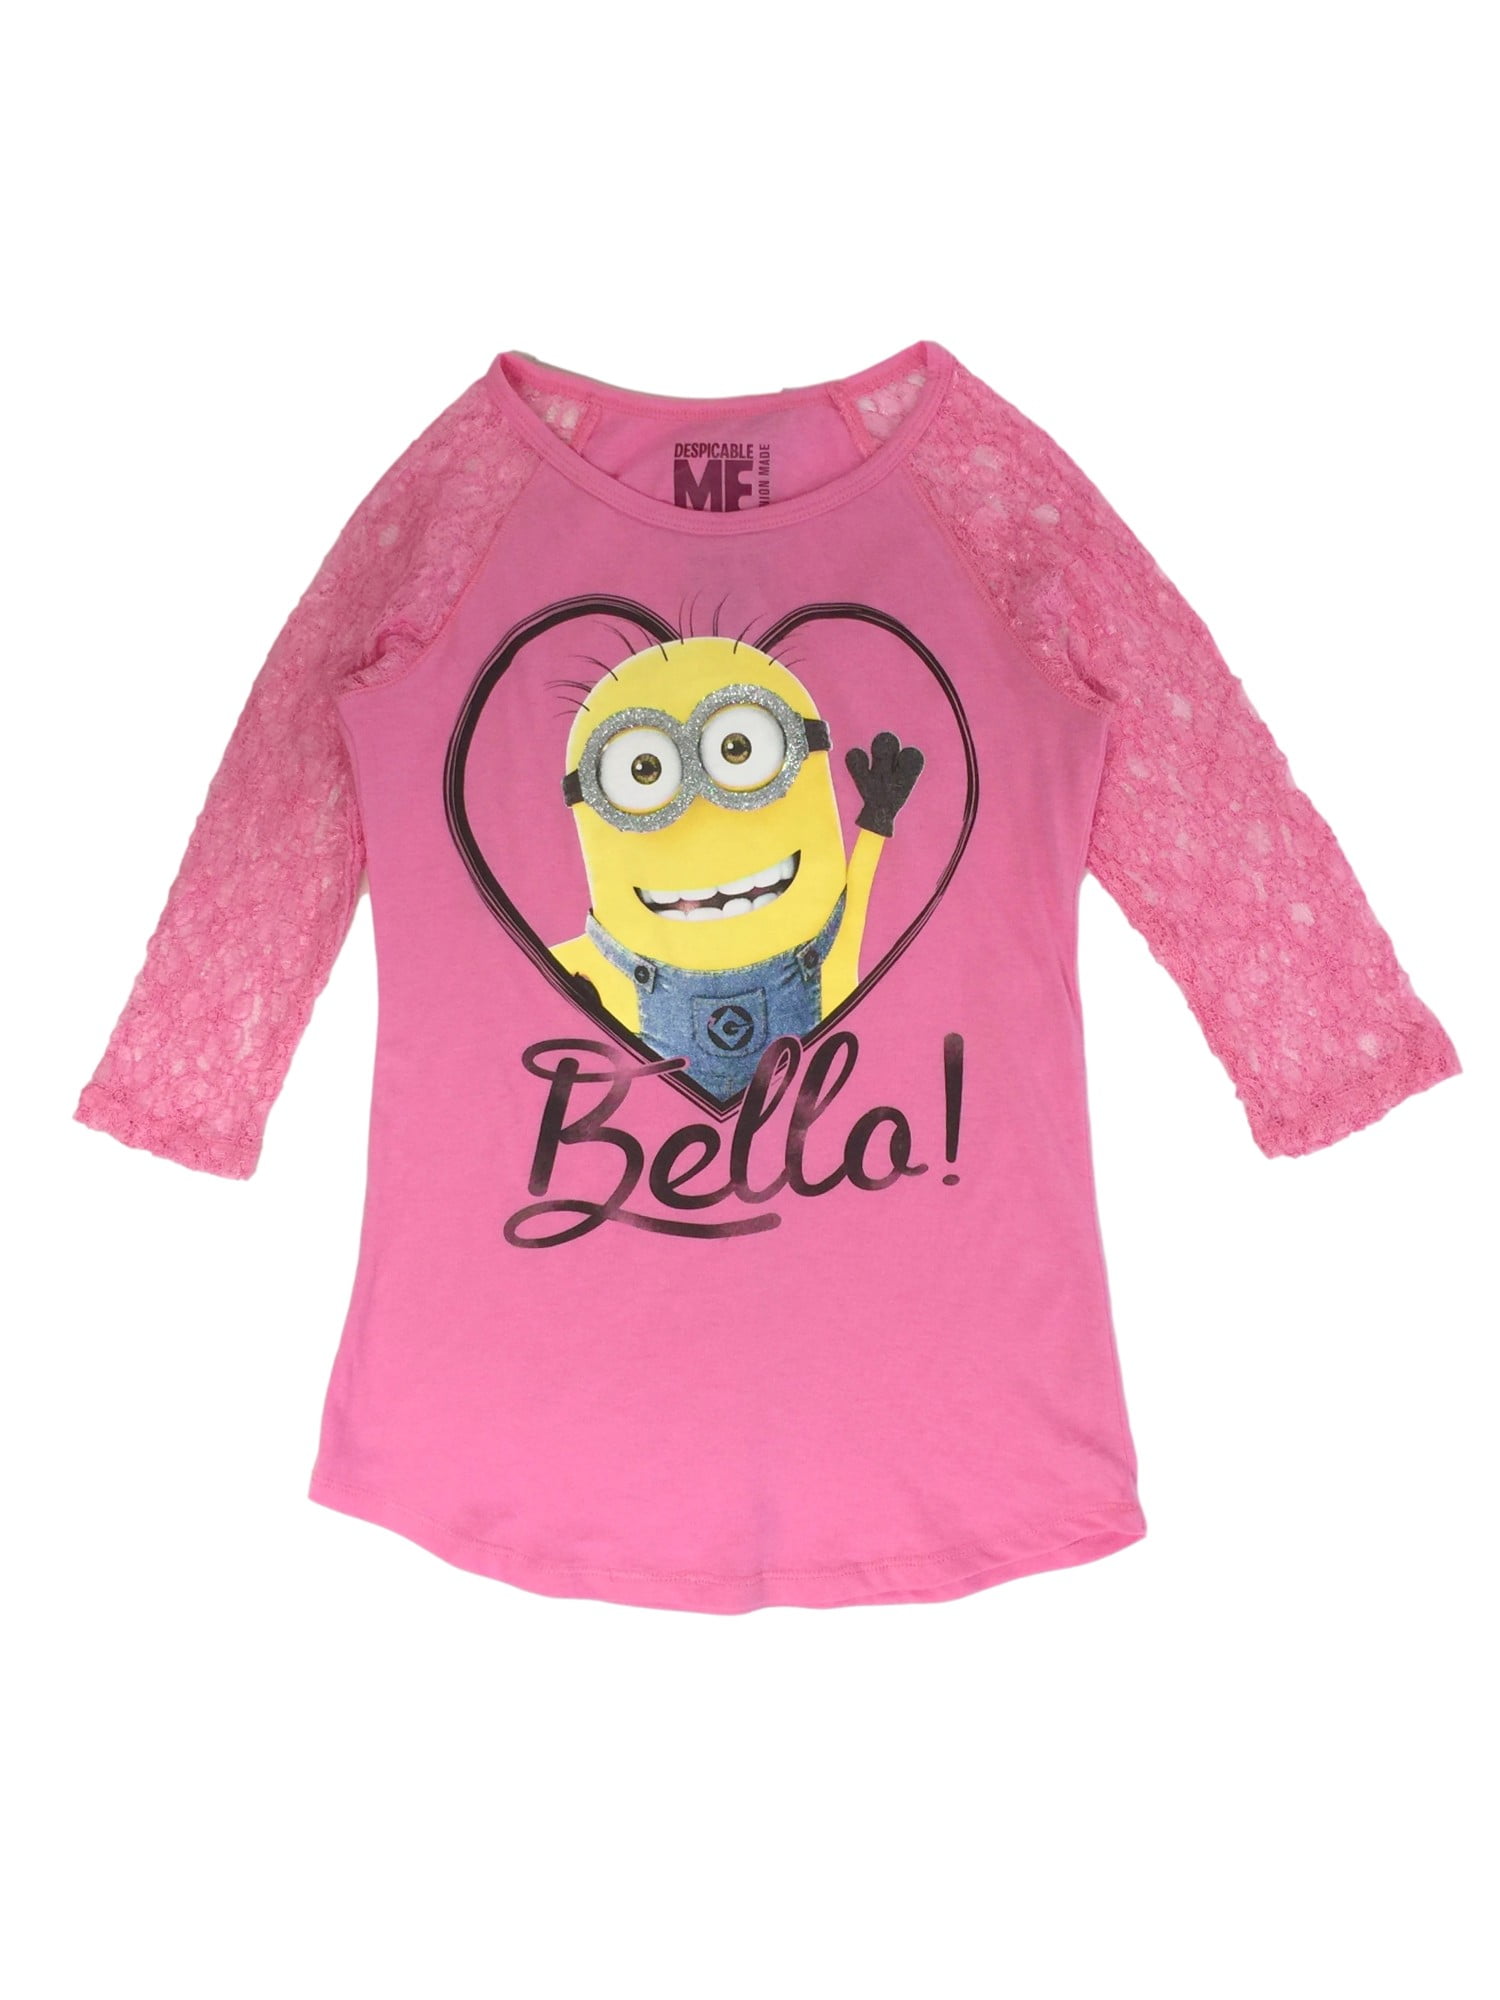 Despicable Me Despicable Me Girls Pink Minion Bello Lace Quarter Sleeve T Shirt Top Walmart Com Walmart Com